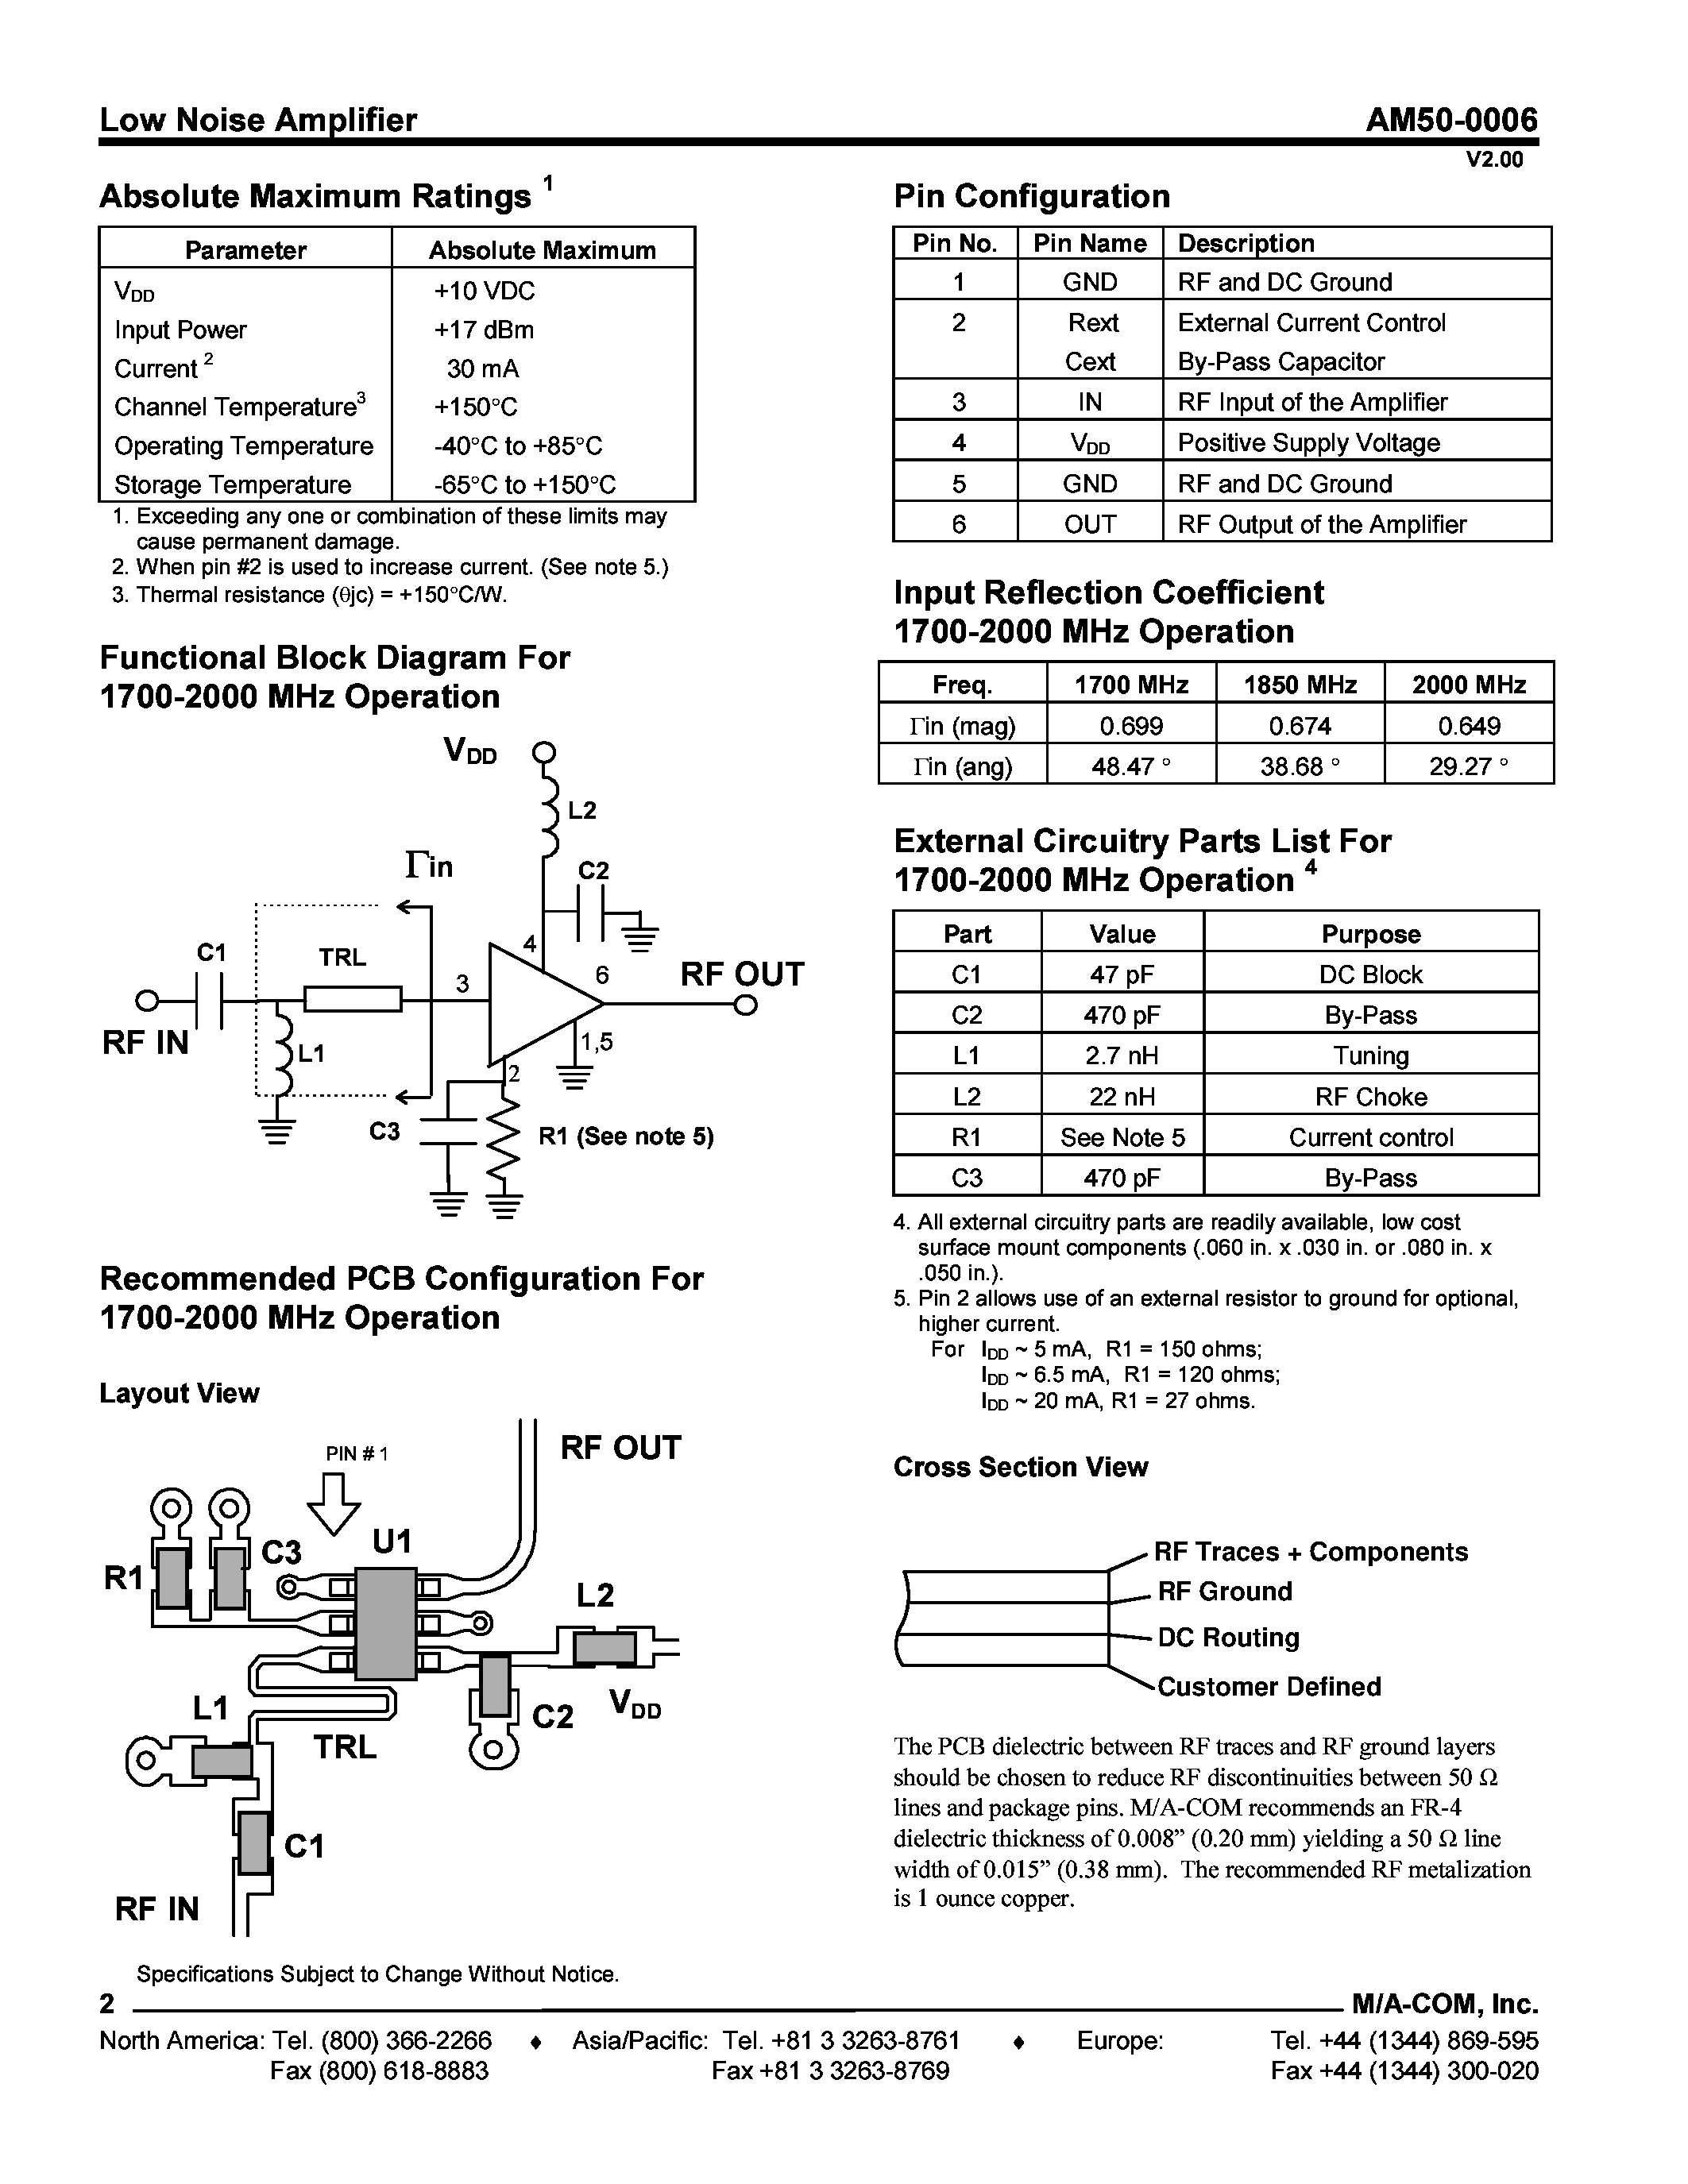 Даташит AM50-0006TR - Low Noise Amplifier 1400 - 2000 MHz страница 2